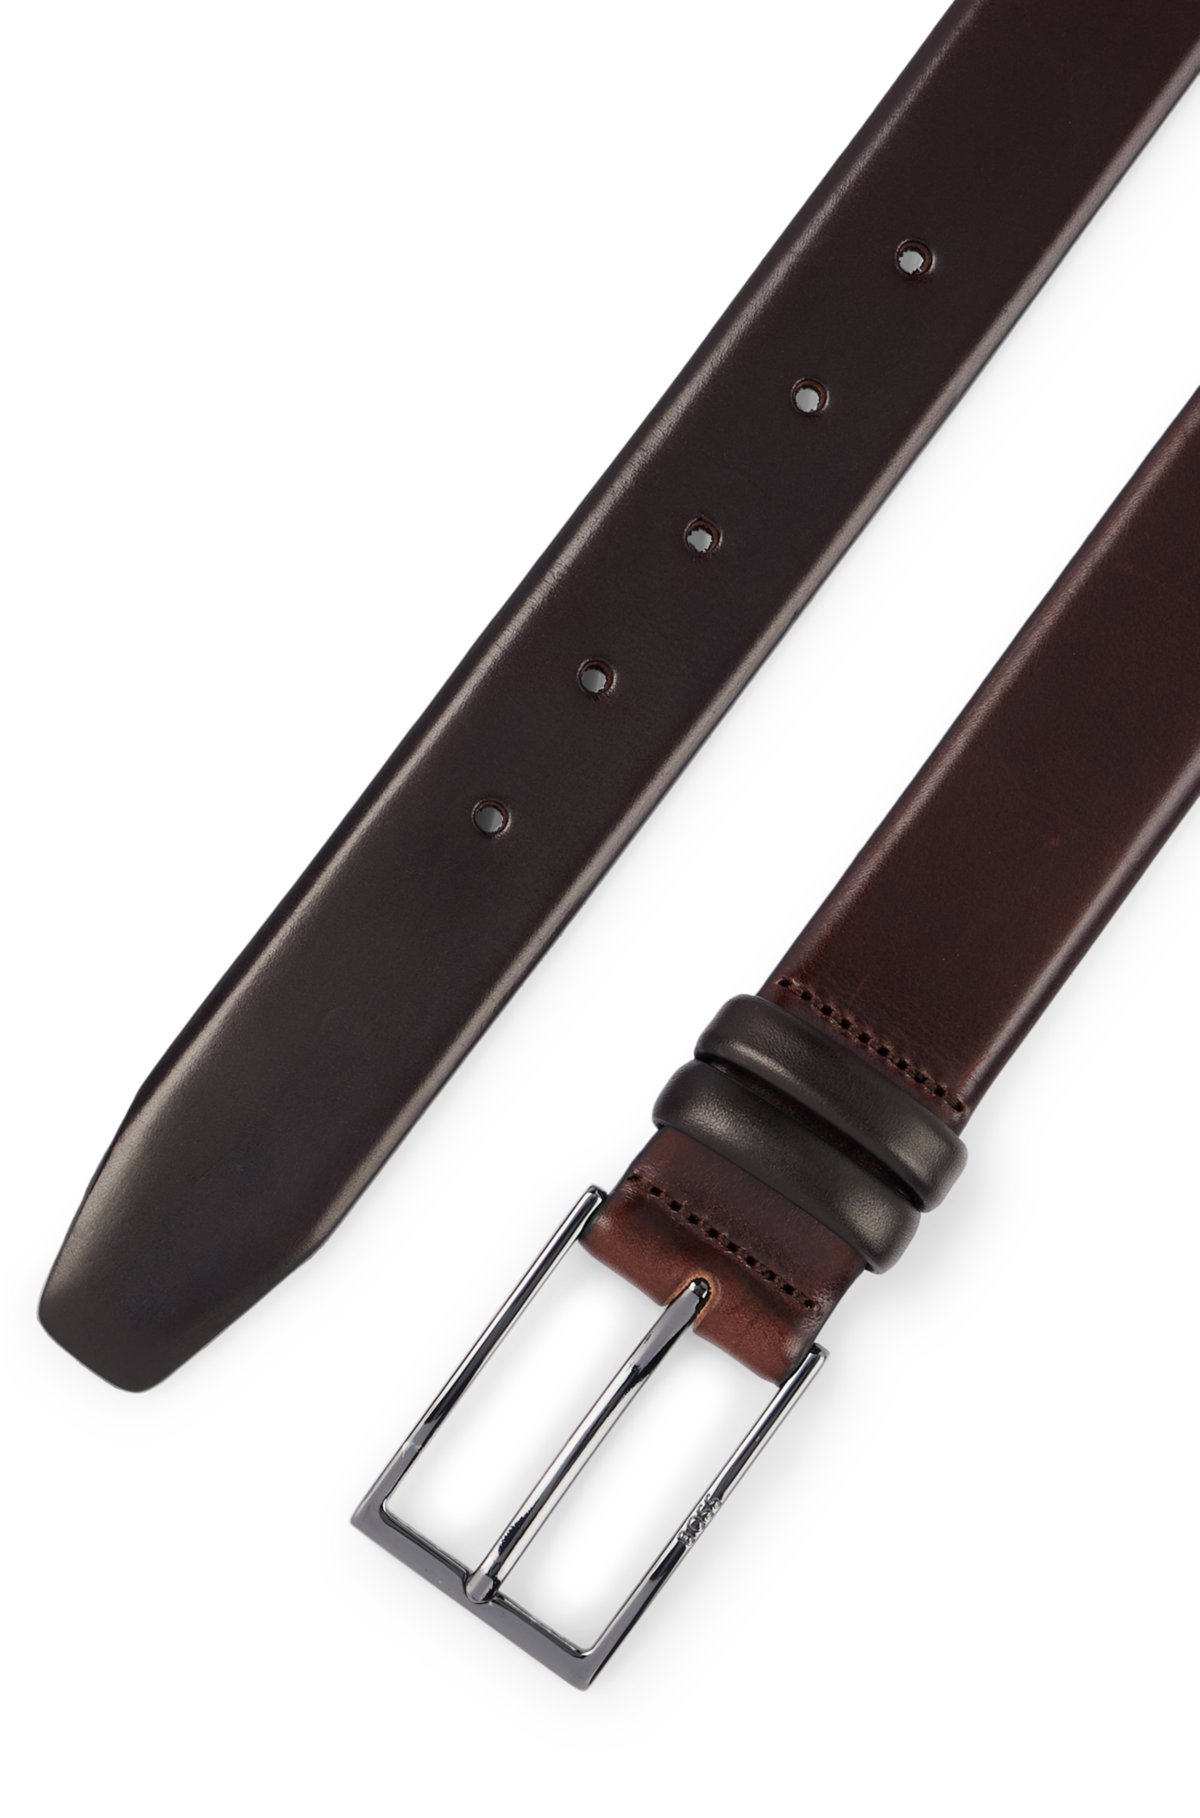 Vegetable-tanned leather belt with gunmetal hardware, Dark Brown